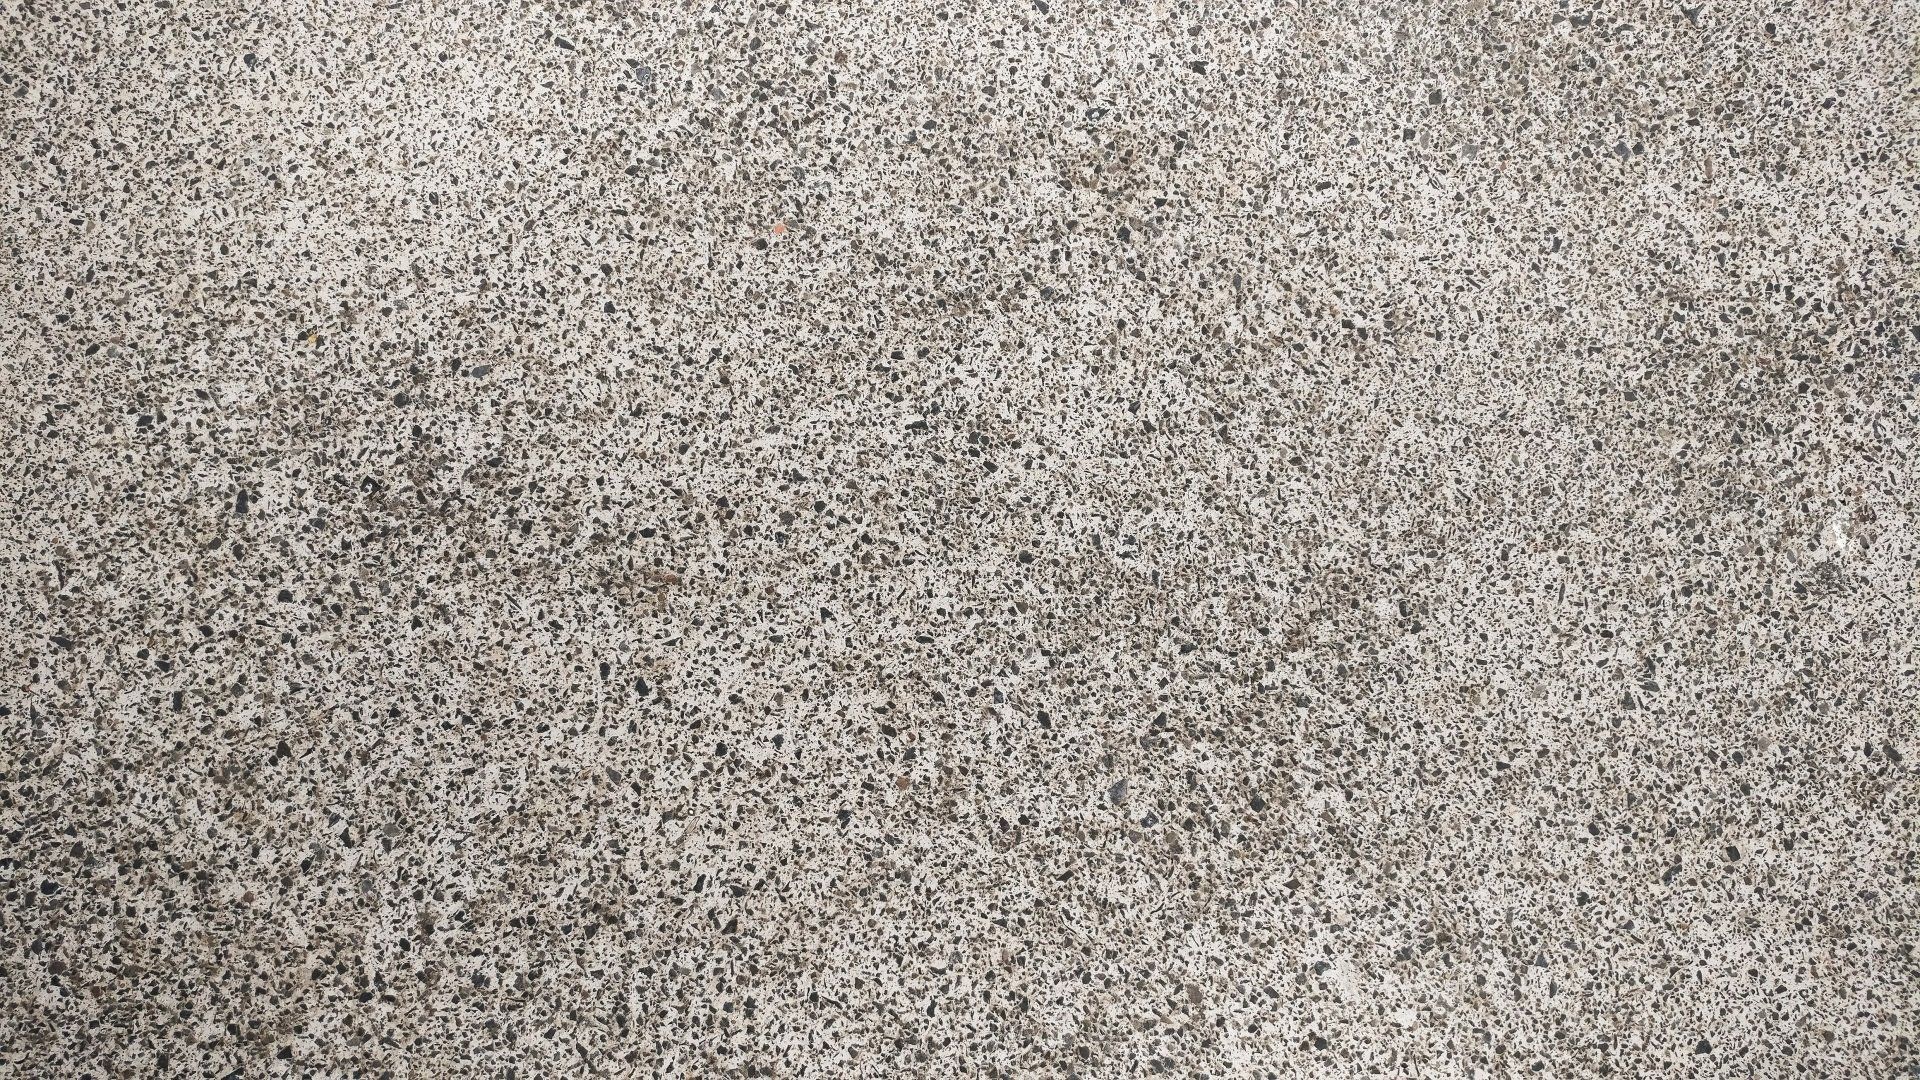 a concrete floor